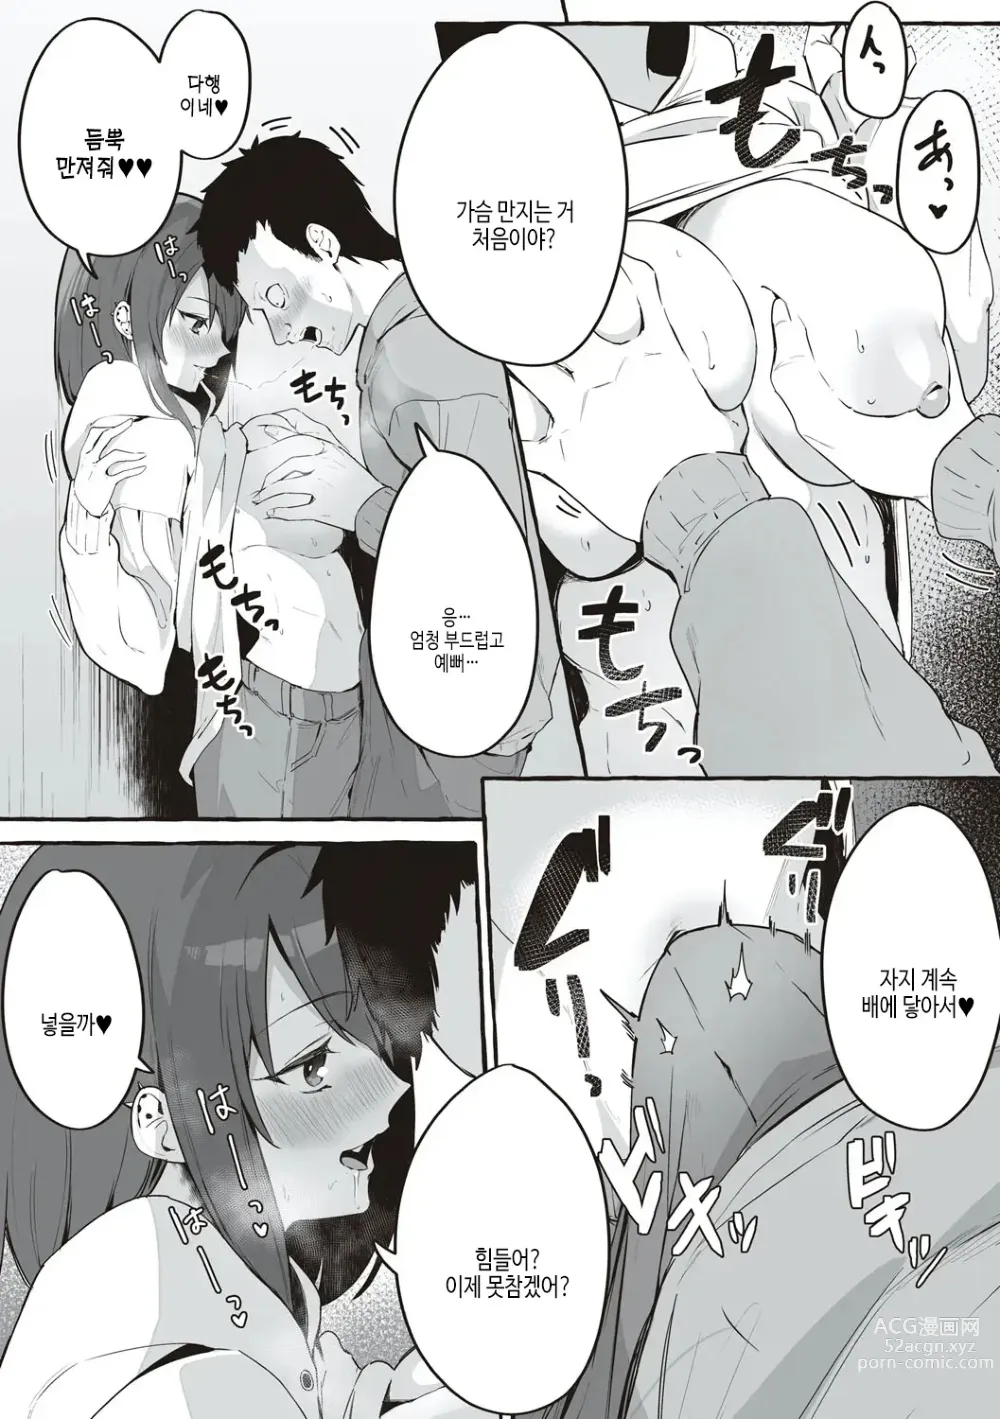 Page 22 of manga #순애 여친